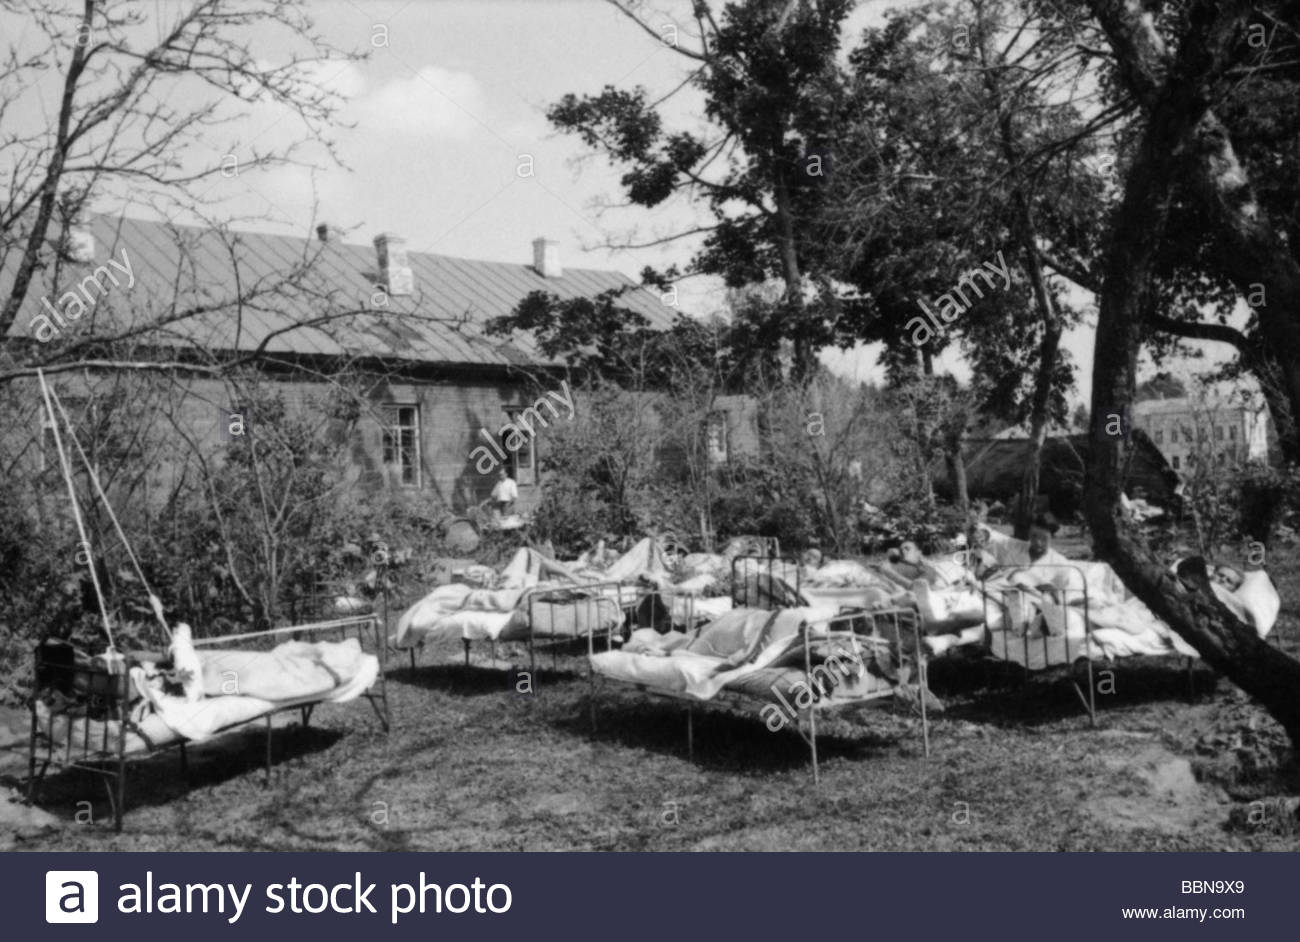 events-second-world-war-wwii-russia-1941-german-field-hospital-near-BBN9X9.jpg